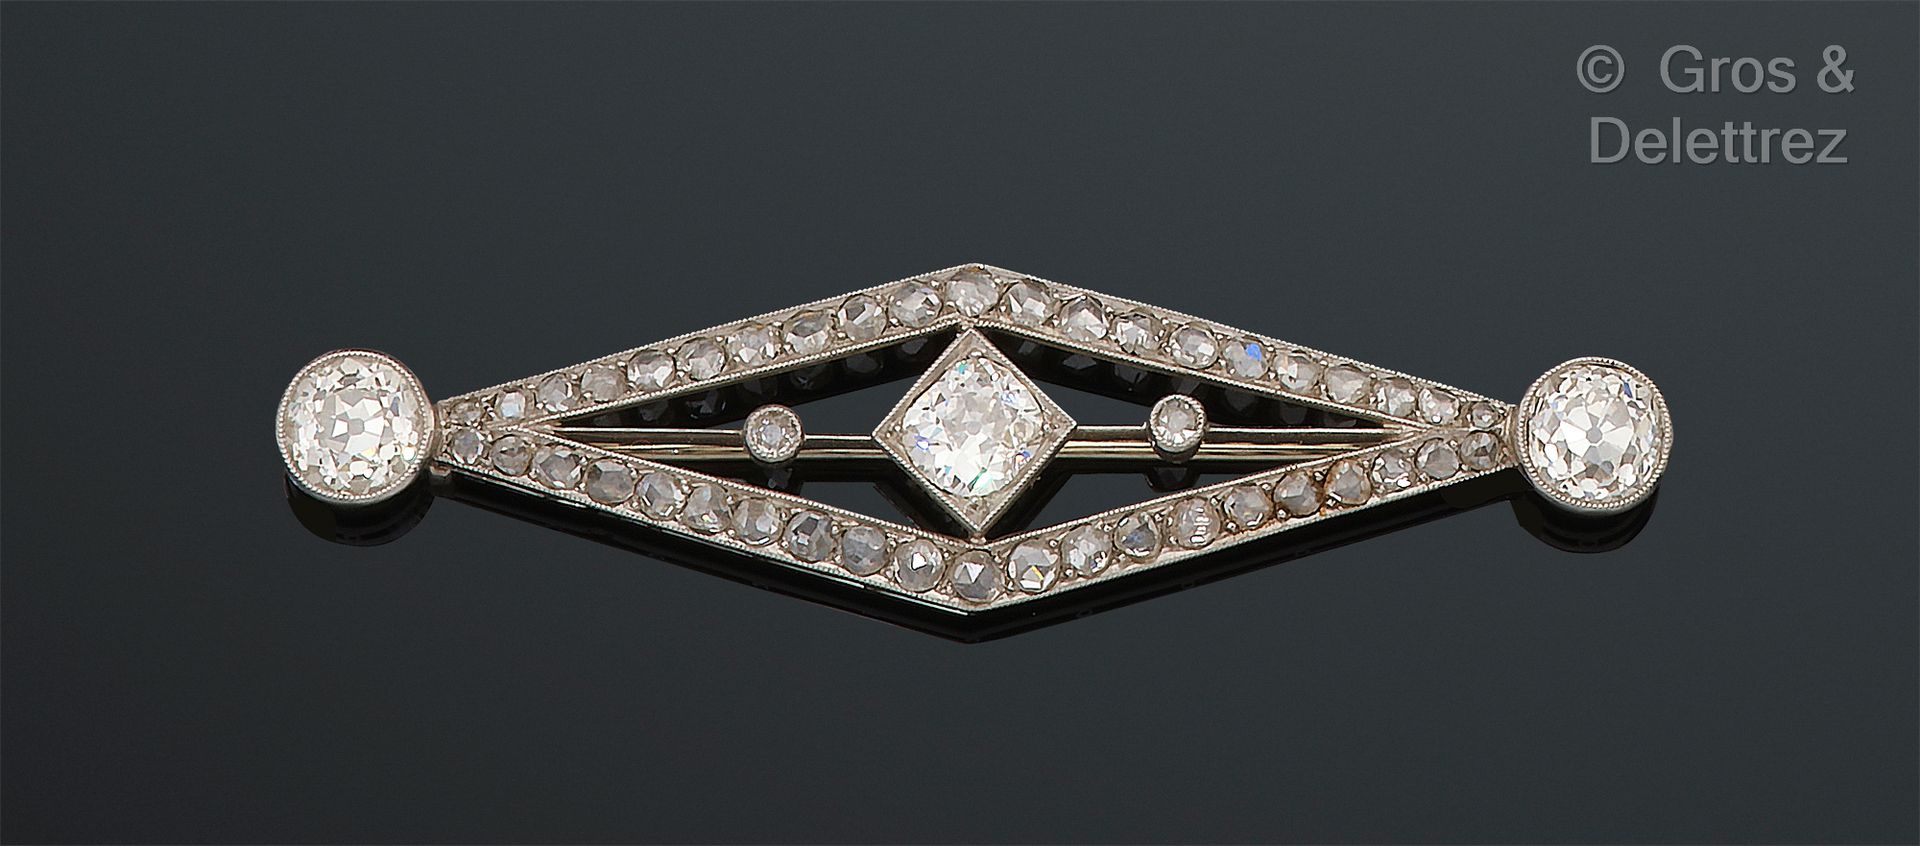 Null 铂金 "Barette "胸针，由一颗镶有玫瑰式切割钻石的钻石组成，上面有三颗较大的老式切割钻石。该胸针为白金材质。尺寸：6.2 x 1.6 mm。毛&hellip;